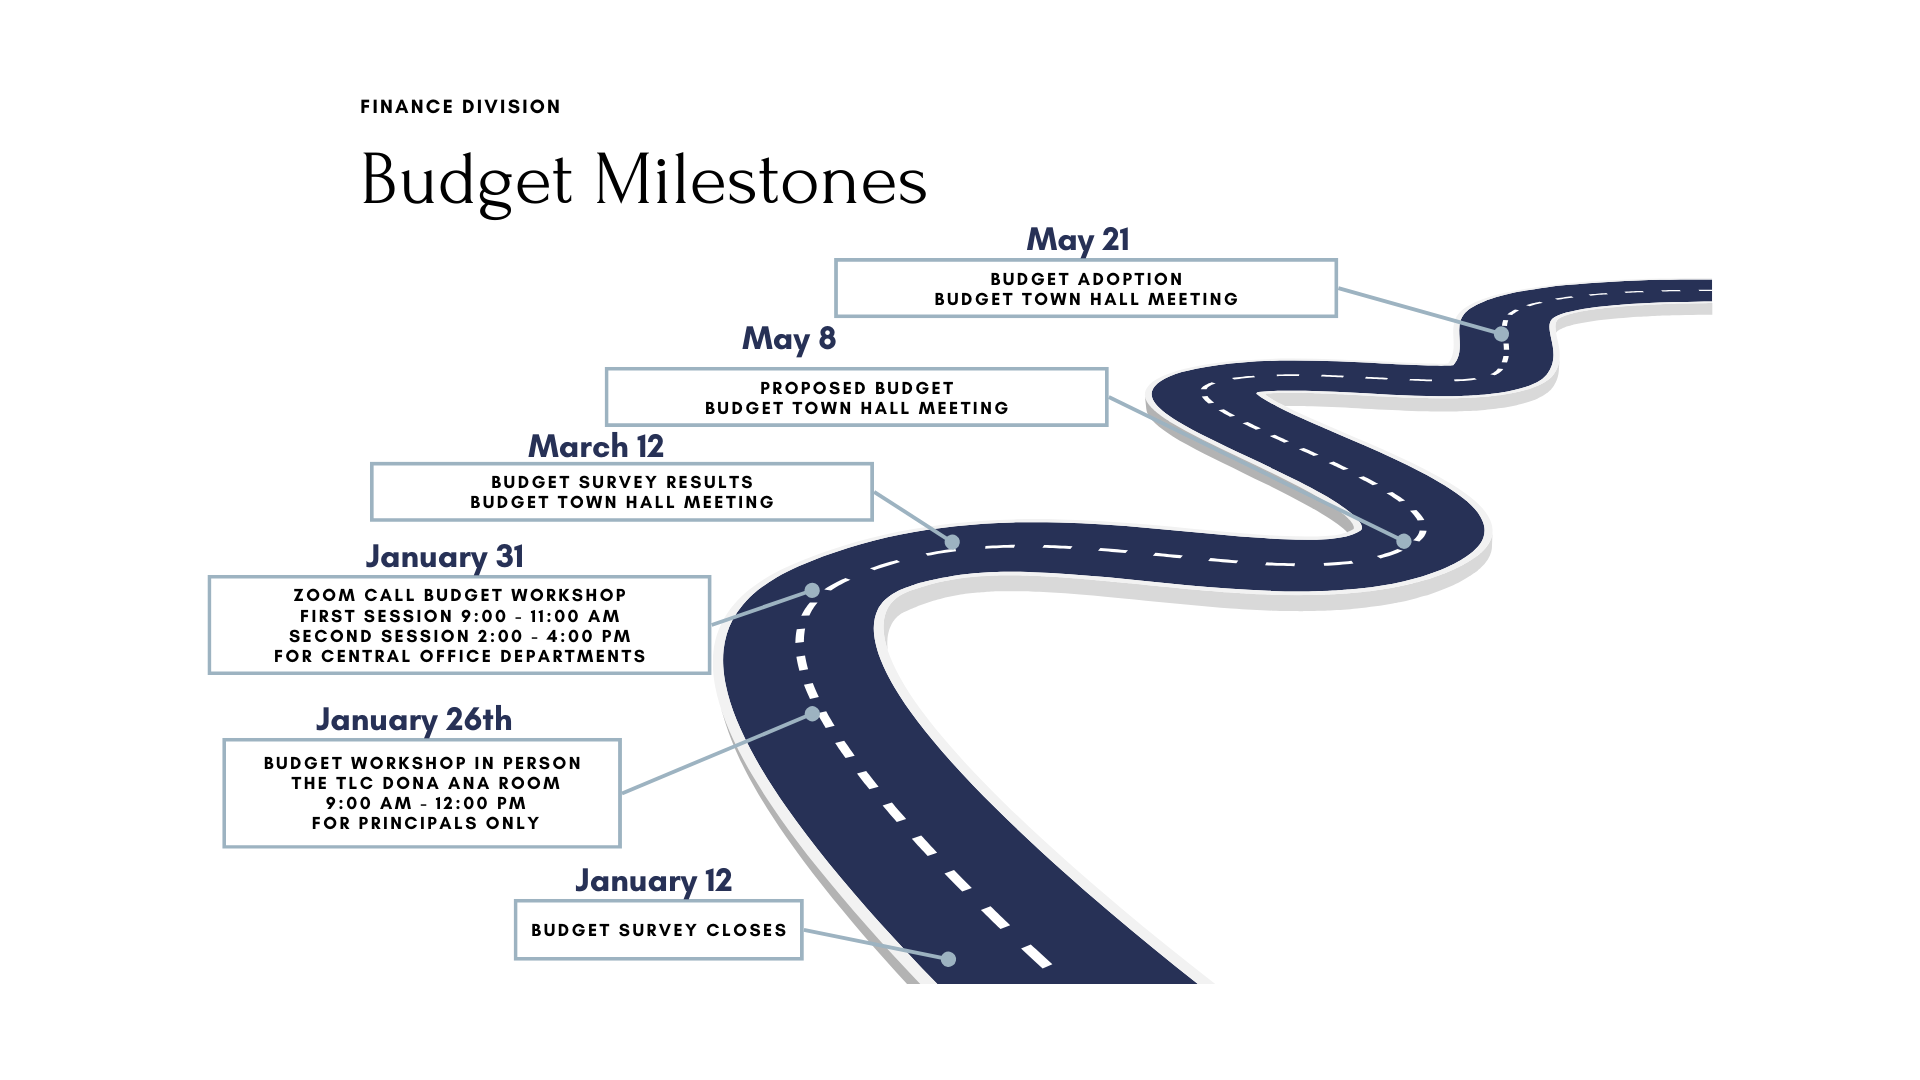 Budget Milestones